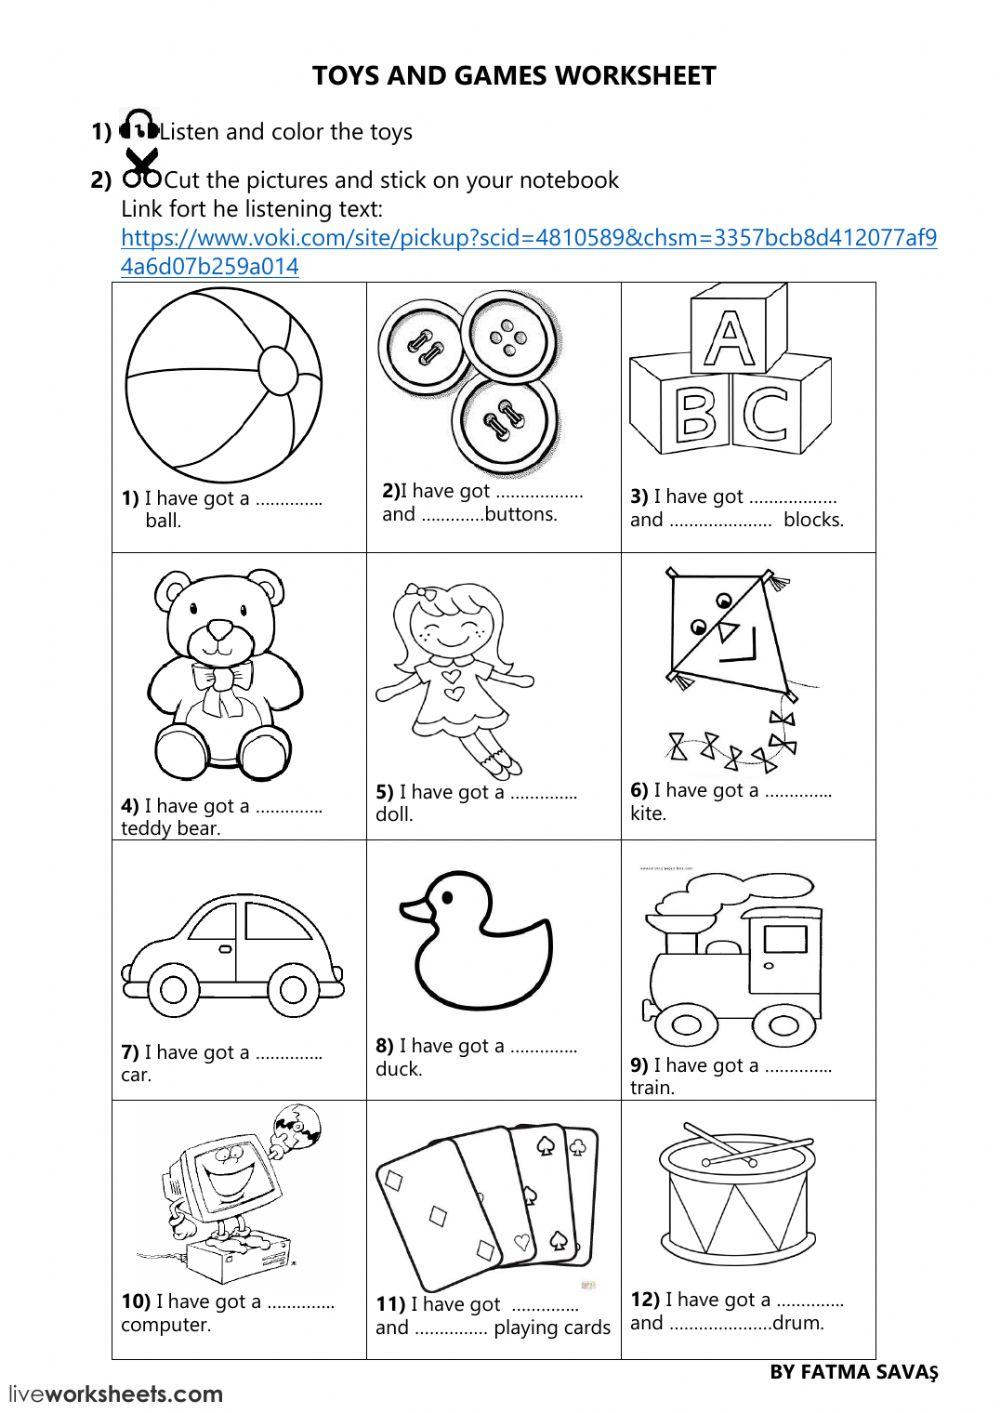 3rd grade unit 5 toys and games online worksheet